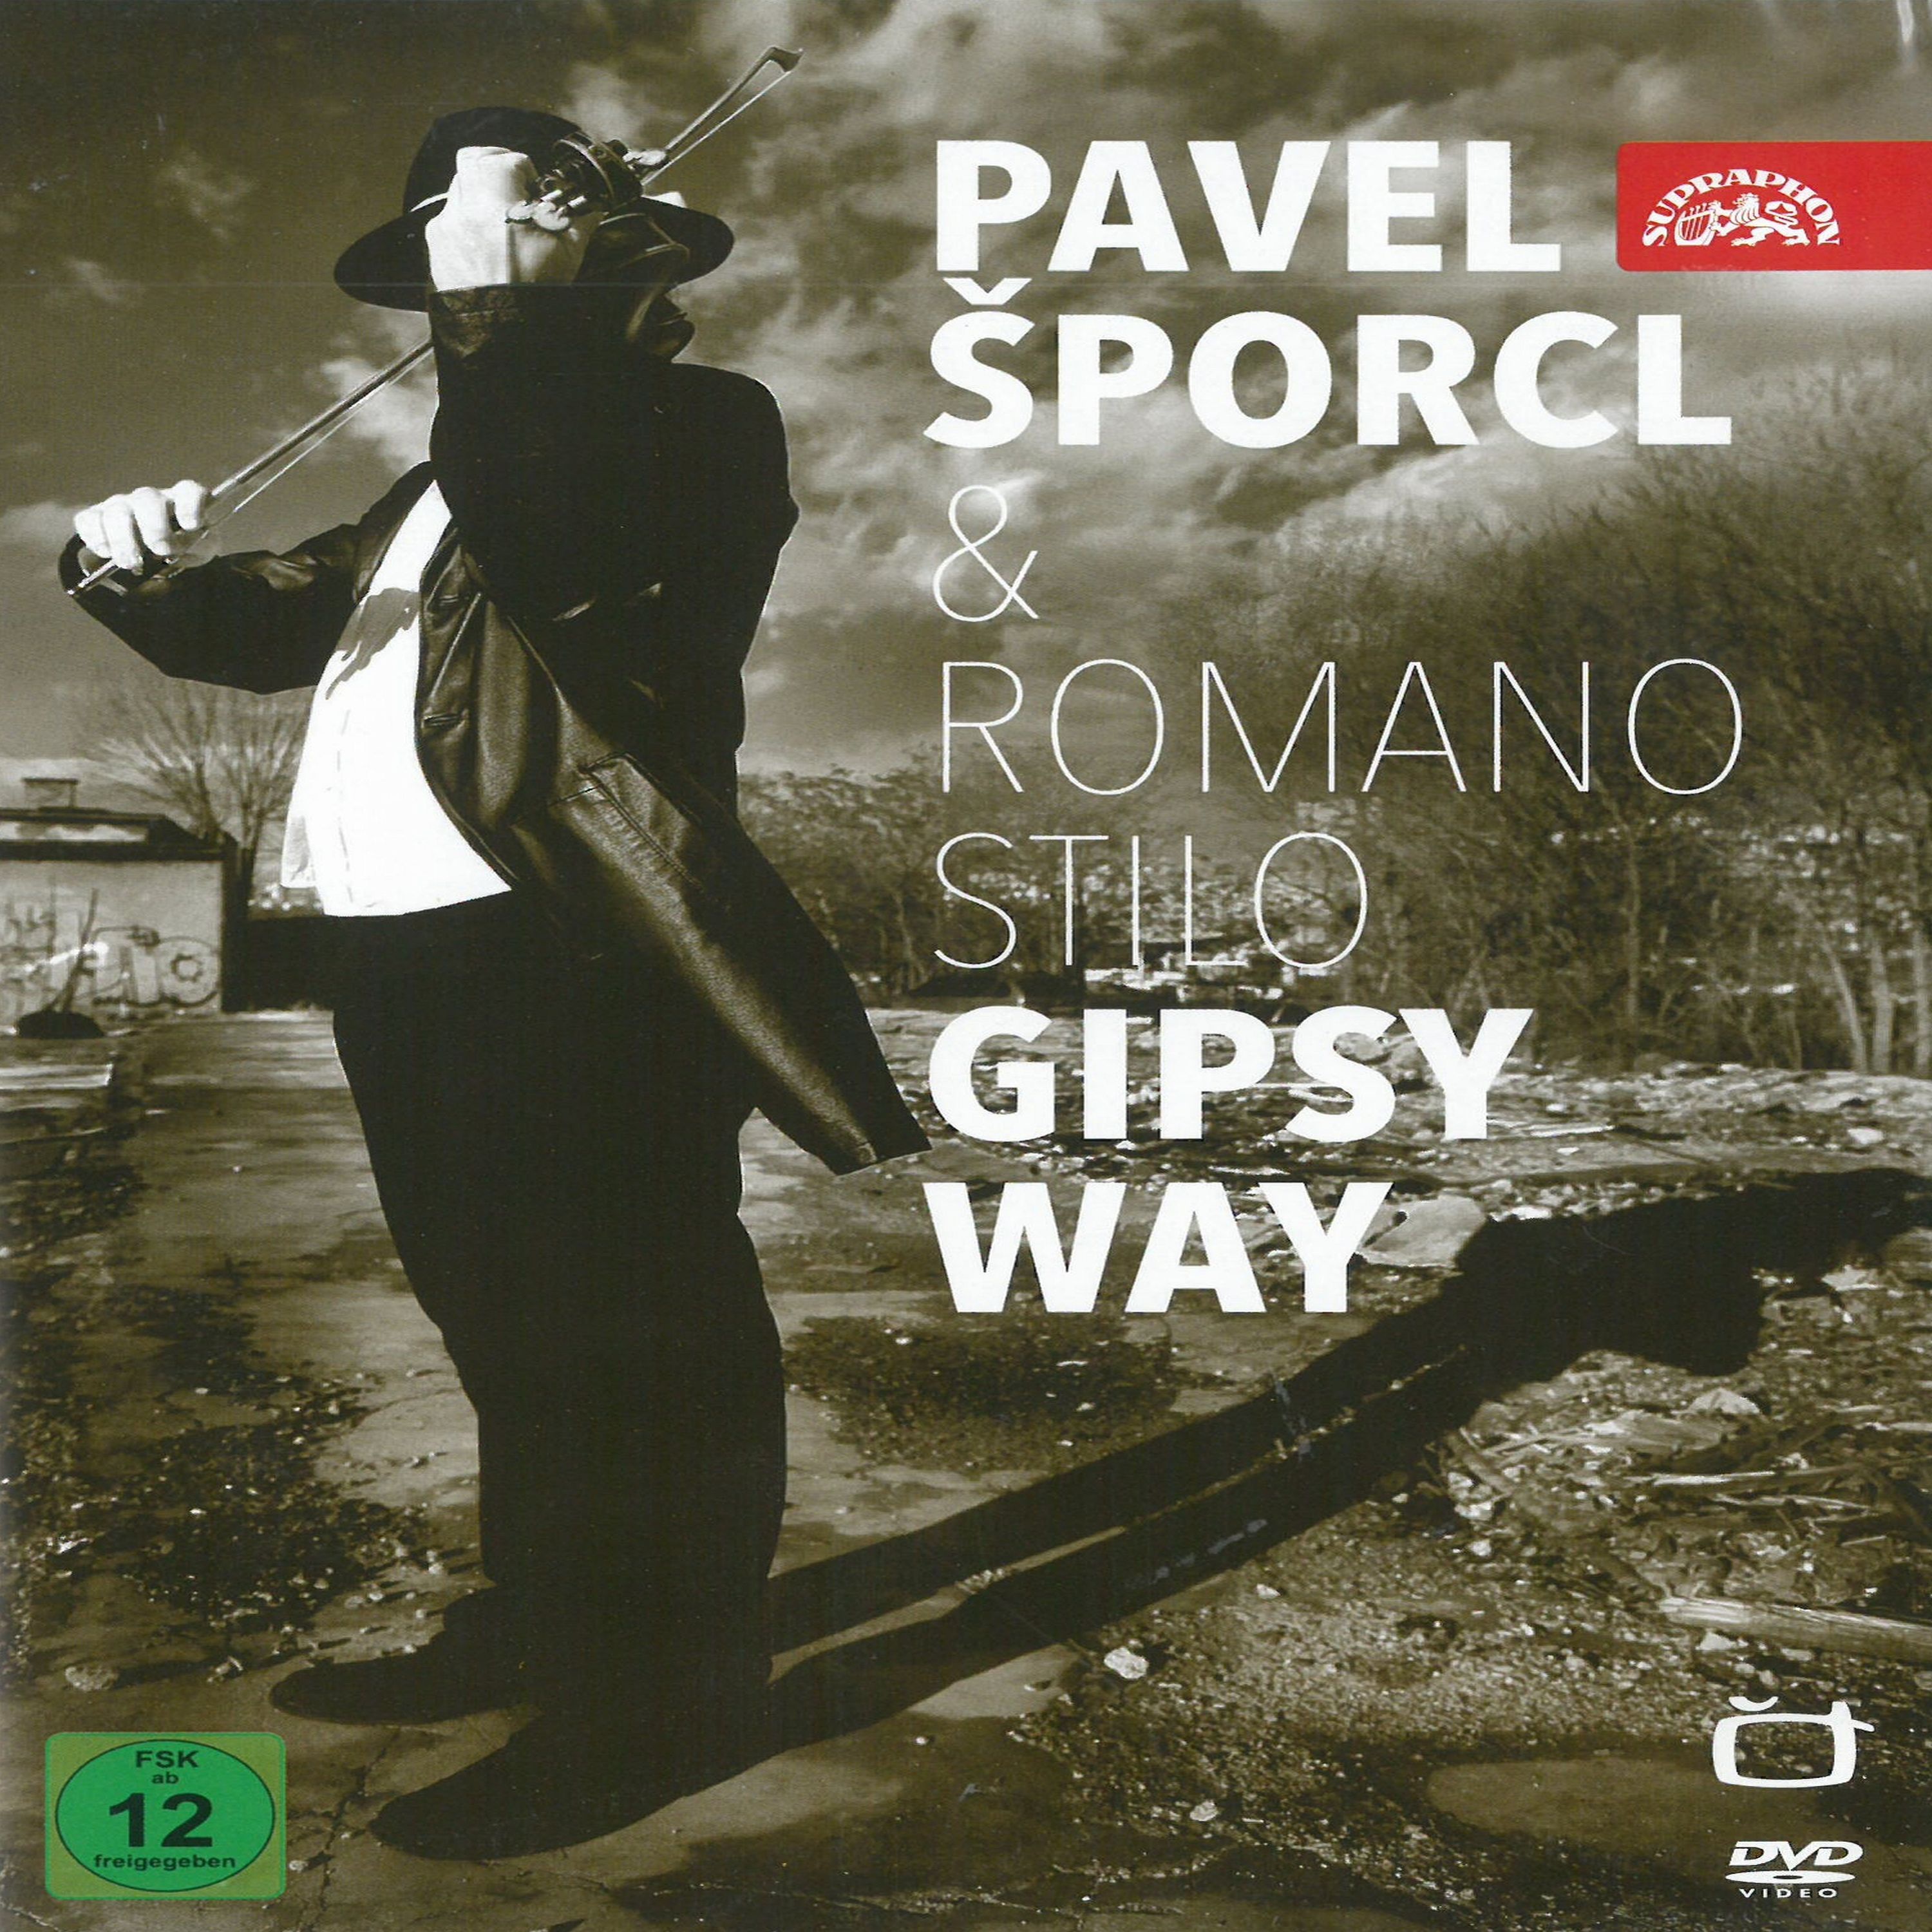 CD Shop - SPORCL PAVEL & ROMANO STILO GIPSY WAY